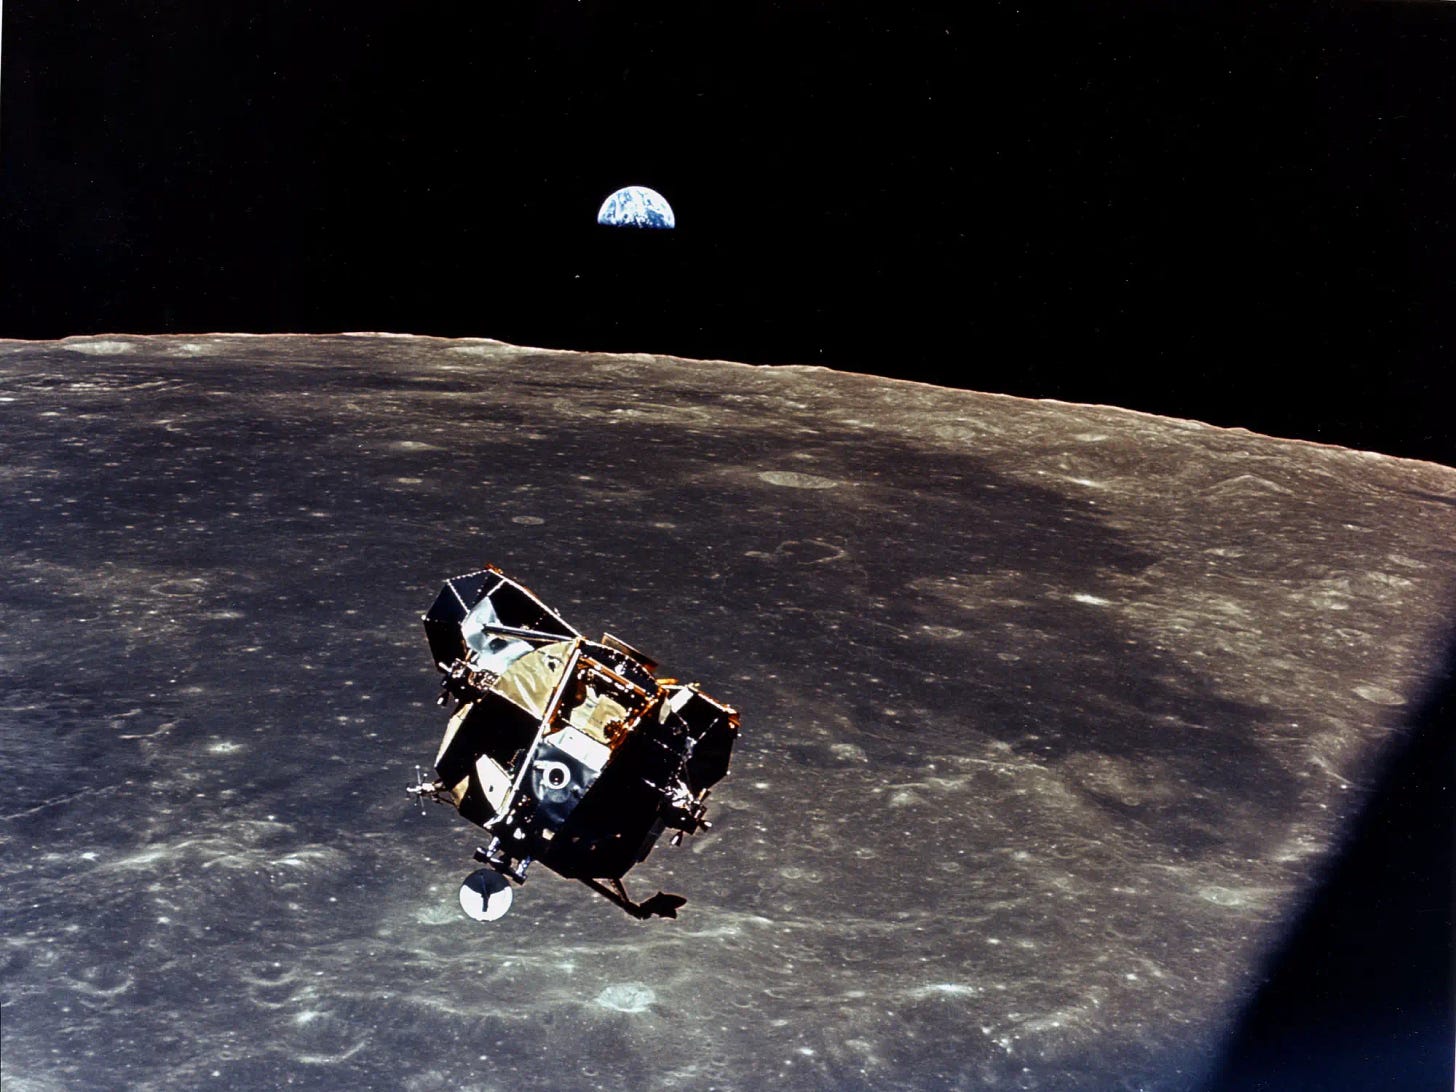 Apollo 10 craft orbiting the moon